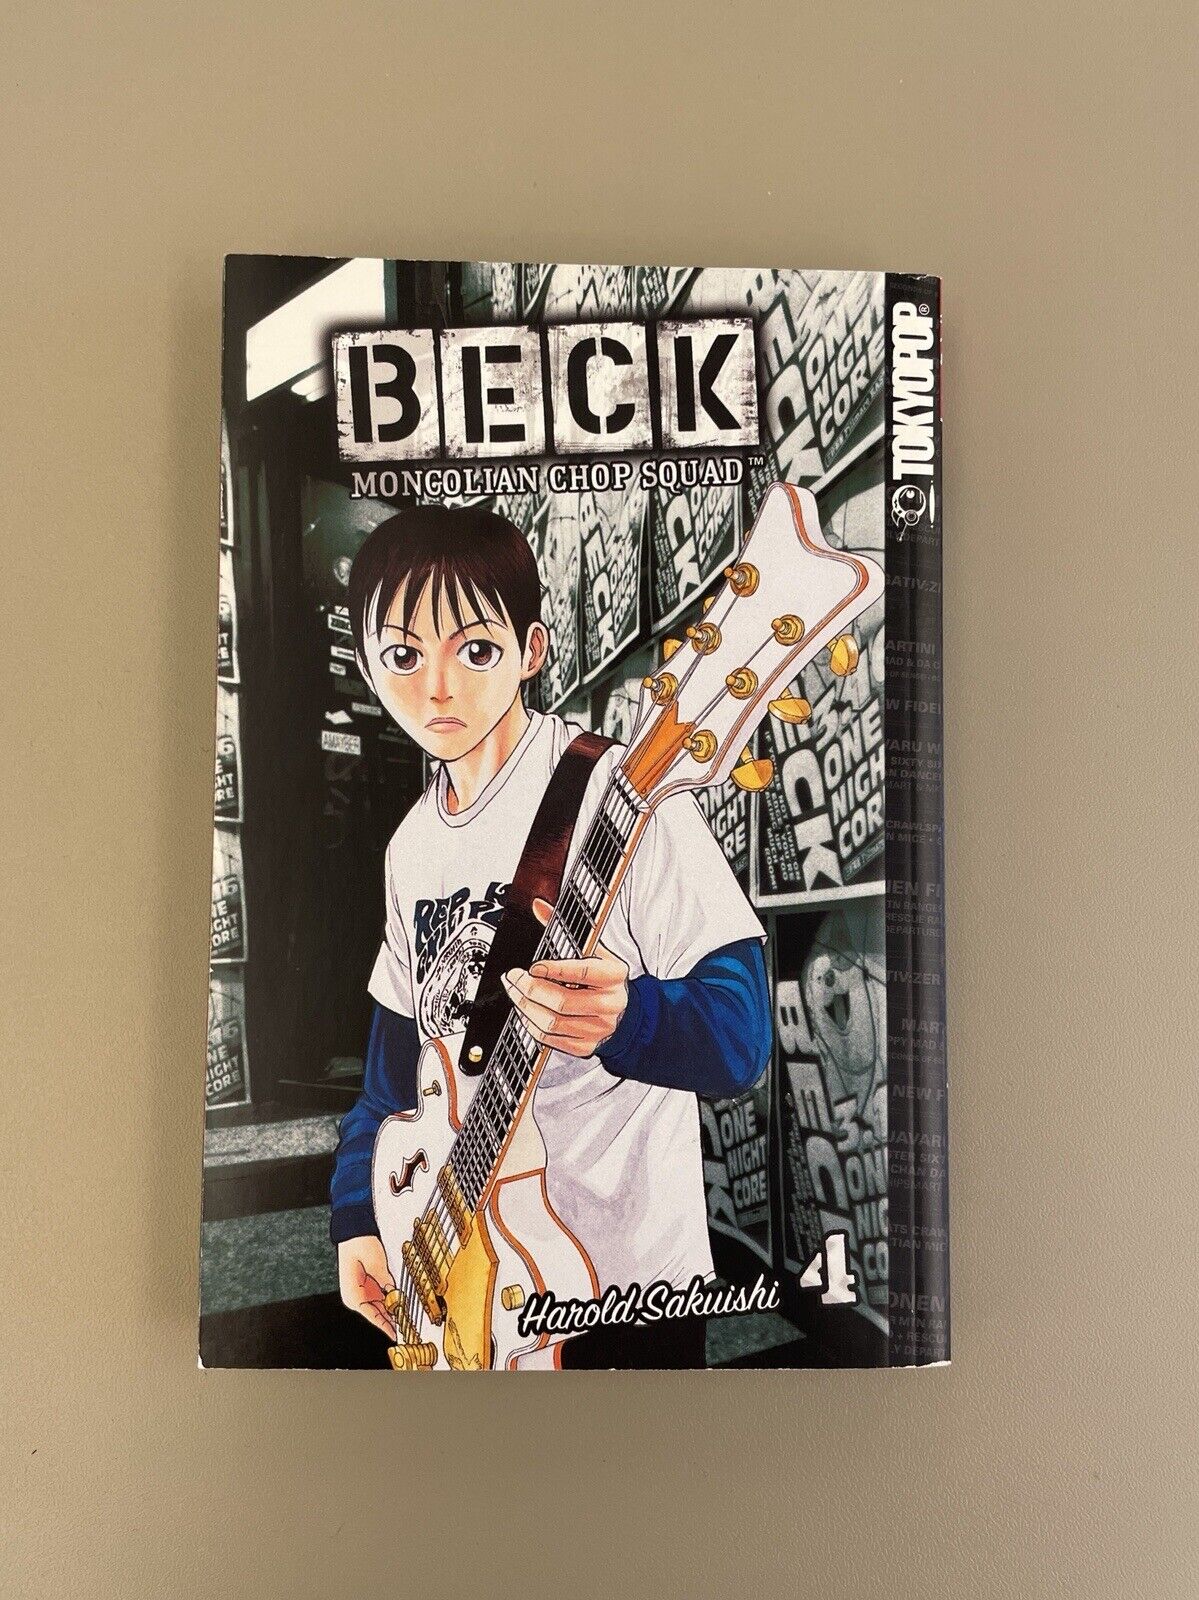 Beck: Mongolian Chop Squad Vol 4 English Manga OOP Volume 4 Tokyopop